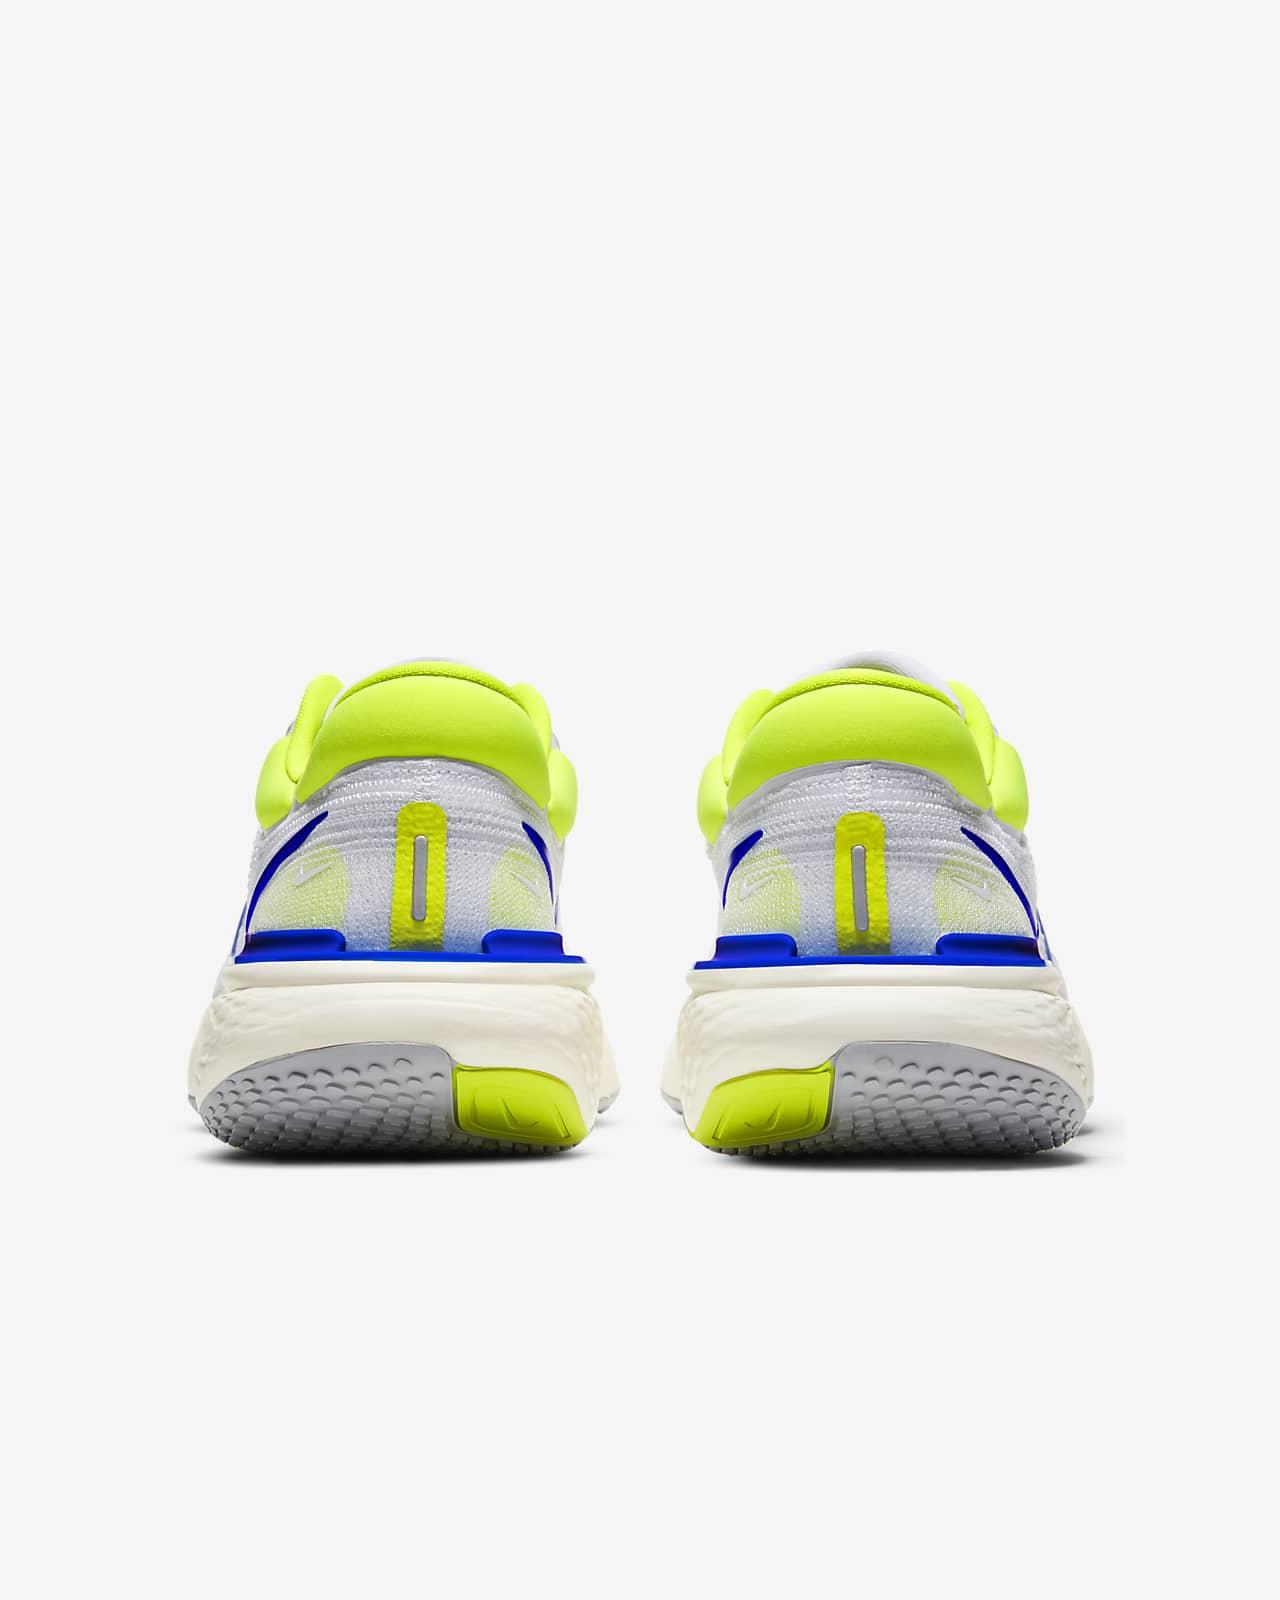 “Nike ZoomX Invincible Run Flyknit” รองเท้าวิ่งที่ใช้โฟม ZoomX ทั้งผืน 04